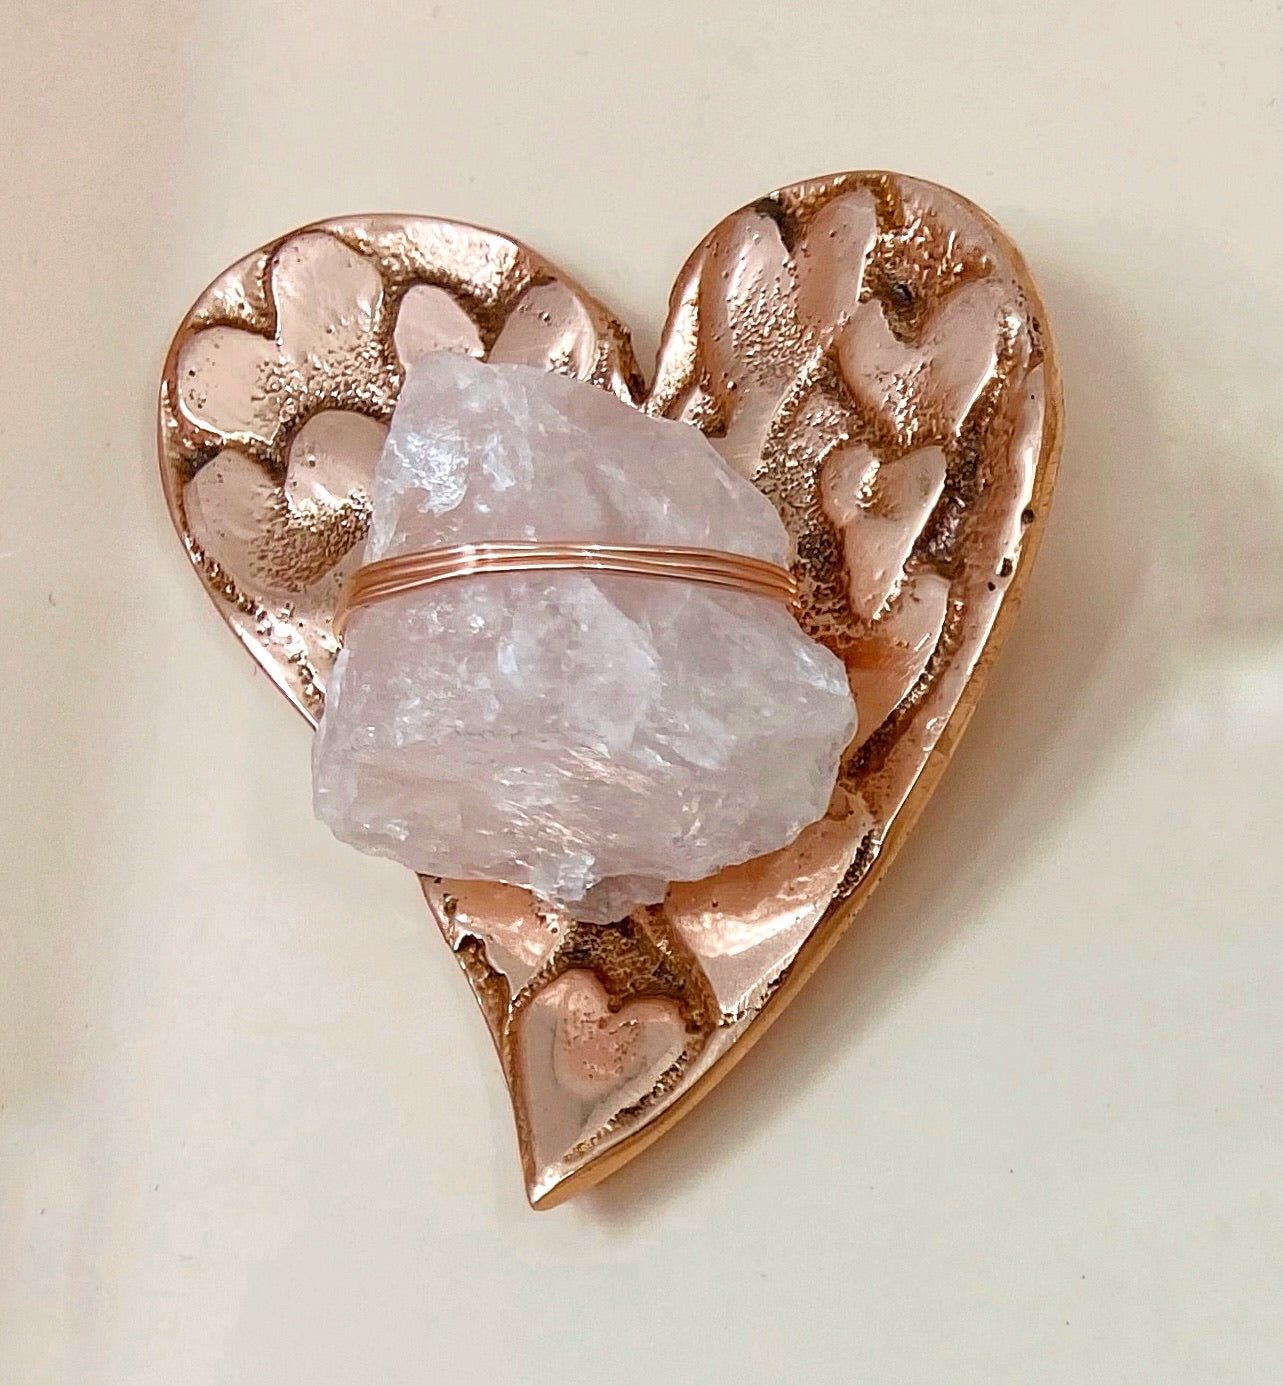 Rose Quartz Healing Crystal Heart Dish - Ariana Ost